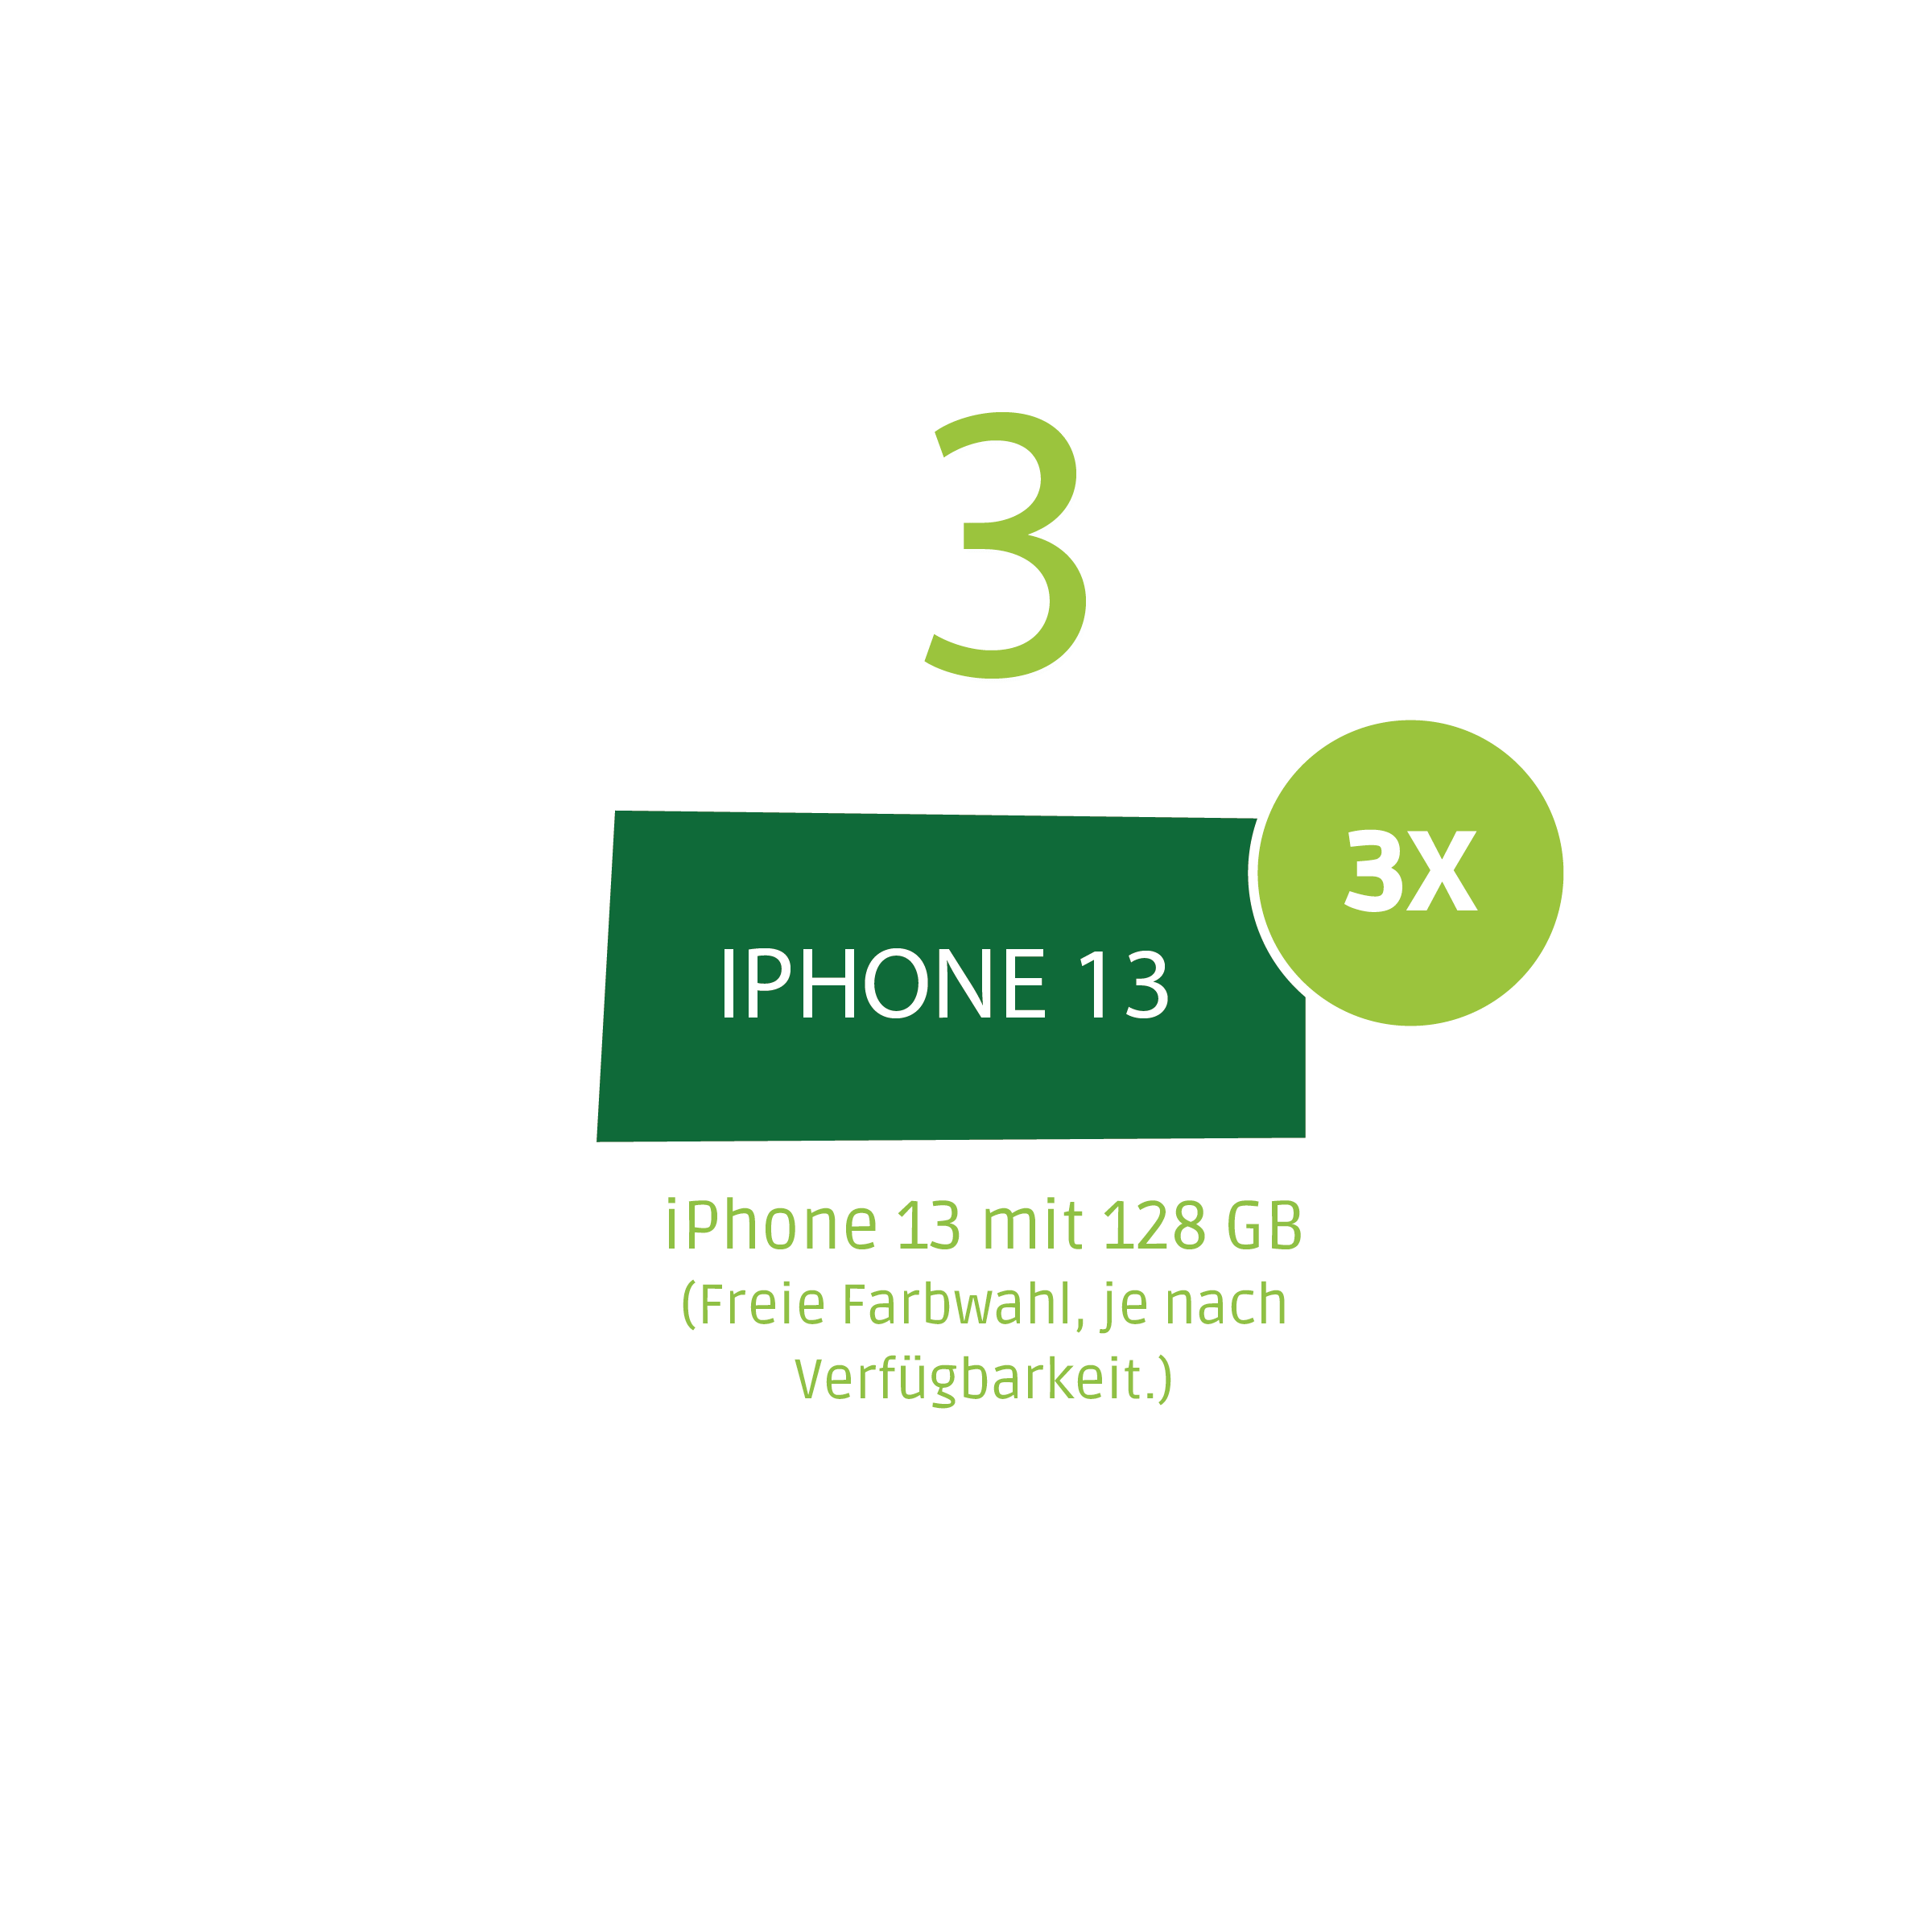 preis3:  iphone 13